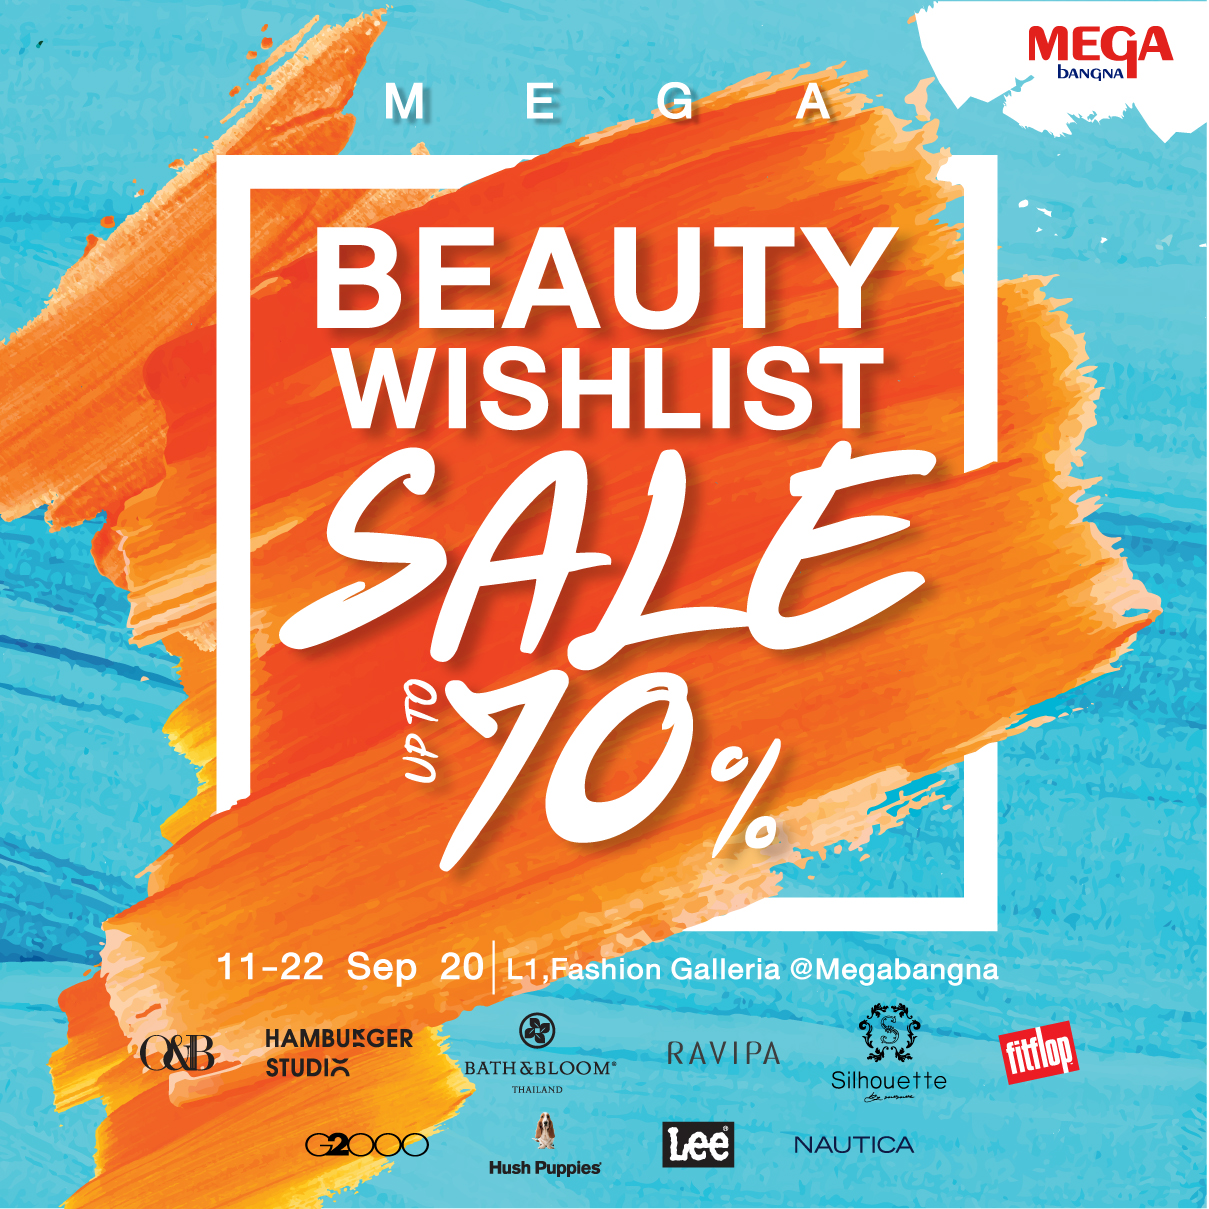 Mega Beauty Wishlist” offers Up To 70 